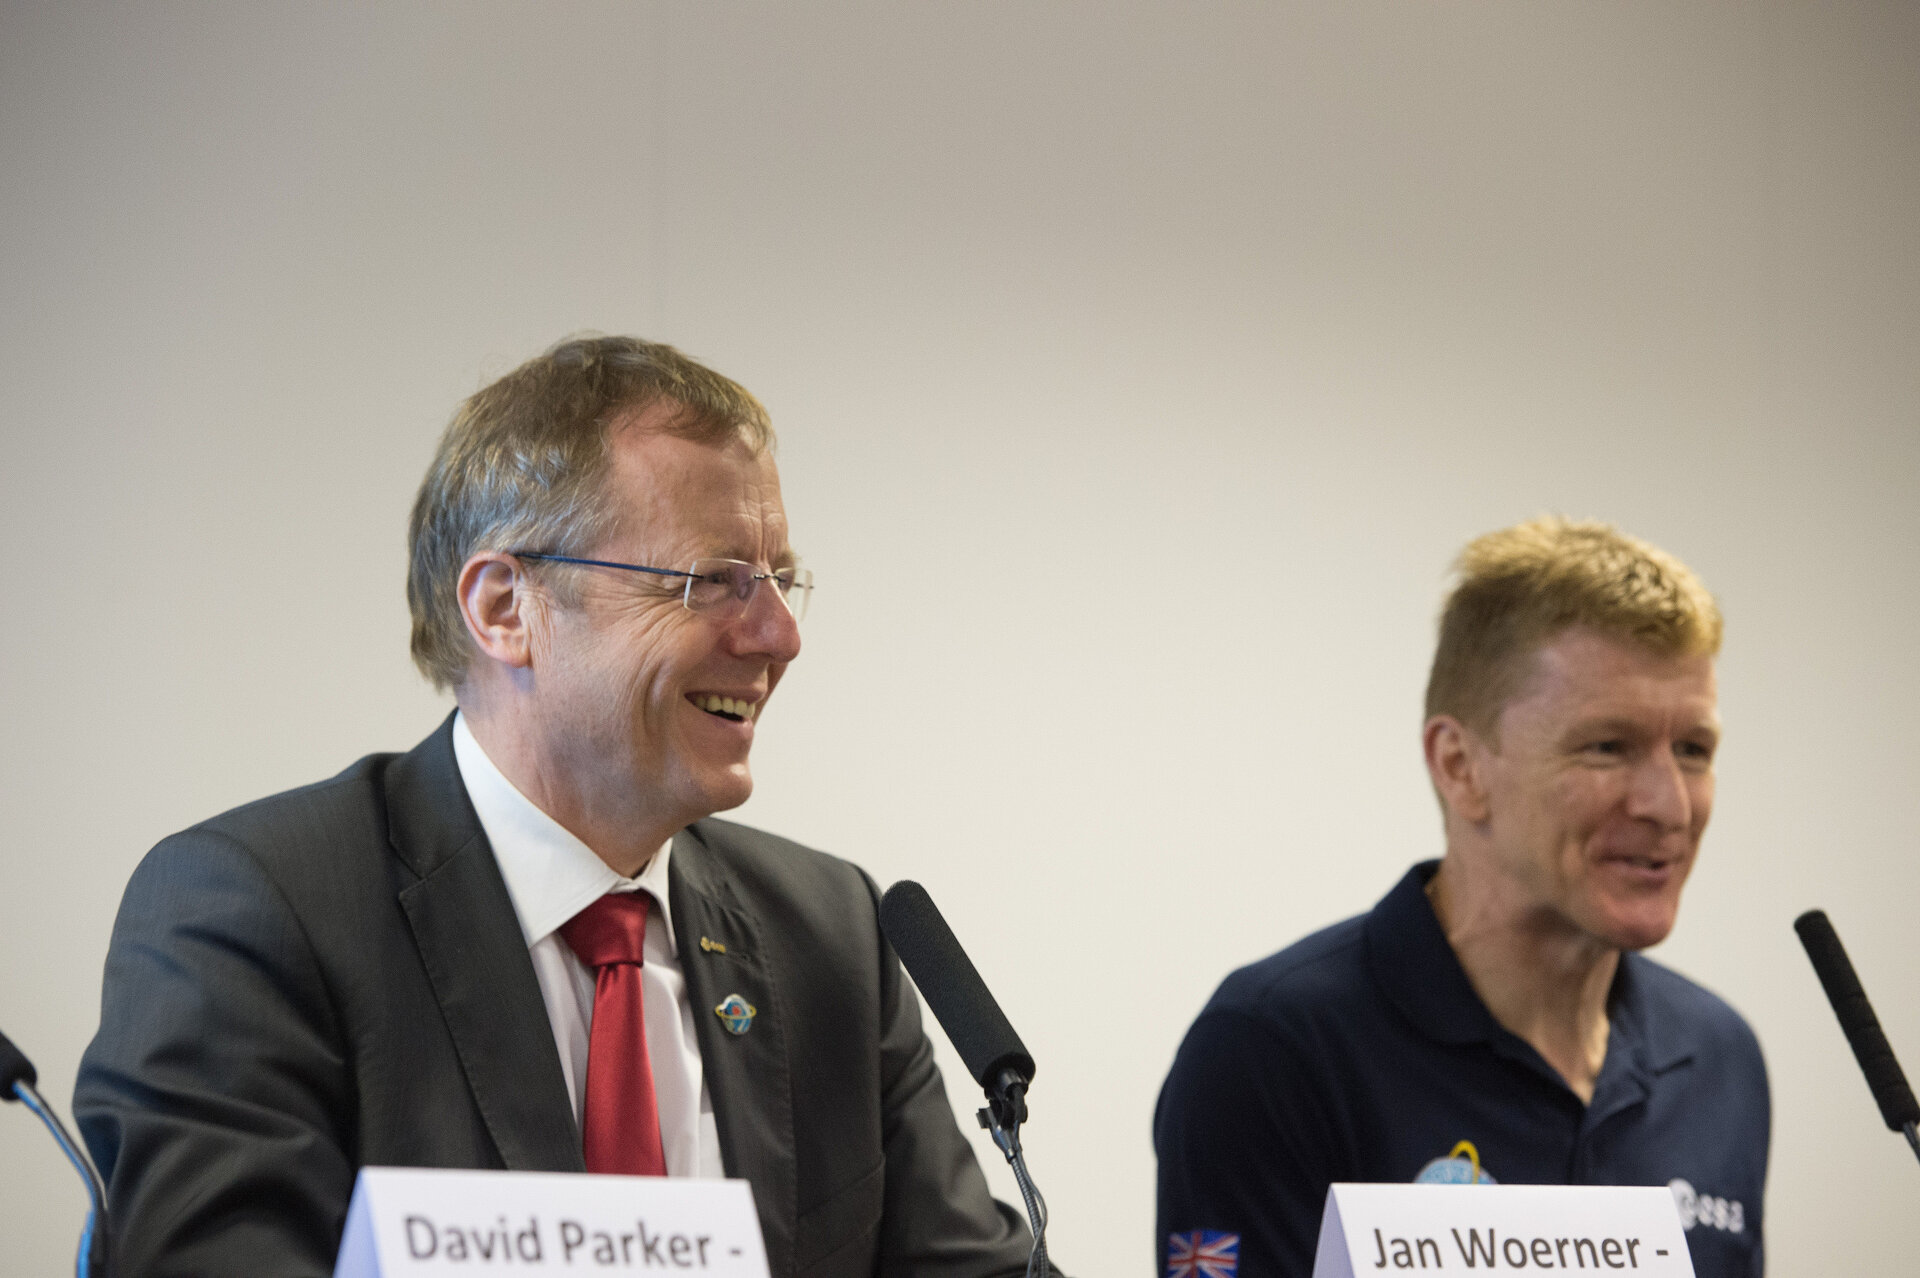 Jan Wörner at the Tim Peake Press Conference